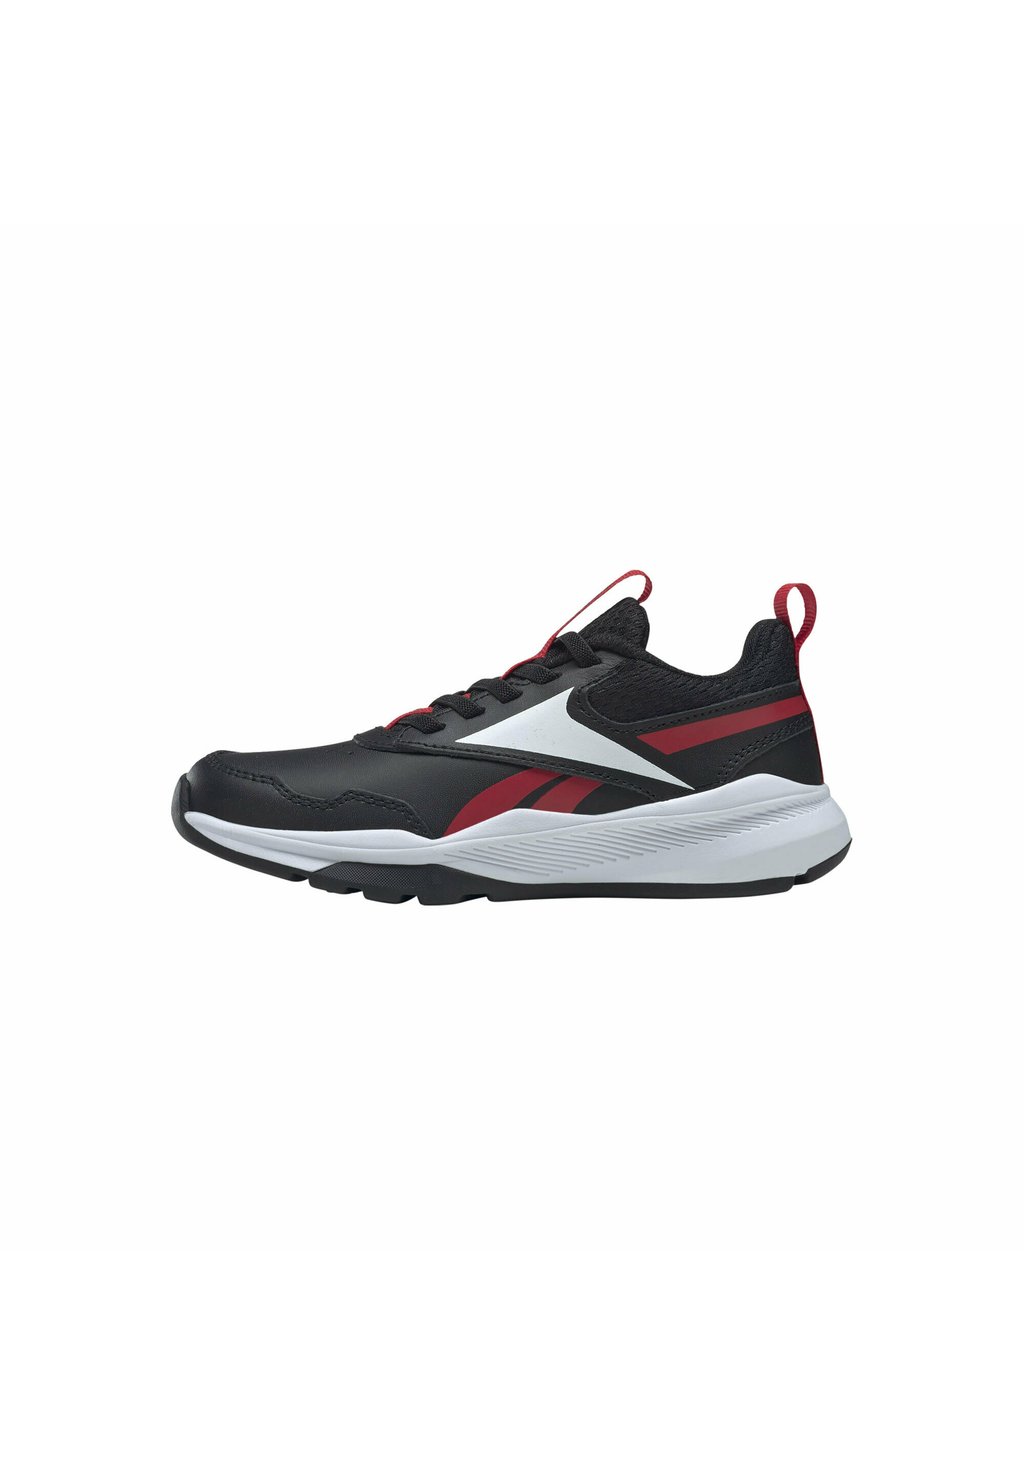 кроссовки для стабилизирующего бега Xt Sprinter 2 Alt Reebok, цвет core black cloud white vector red